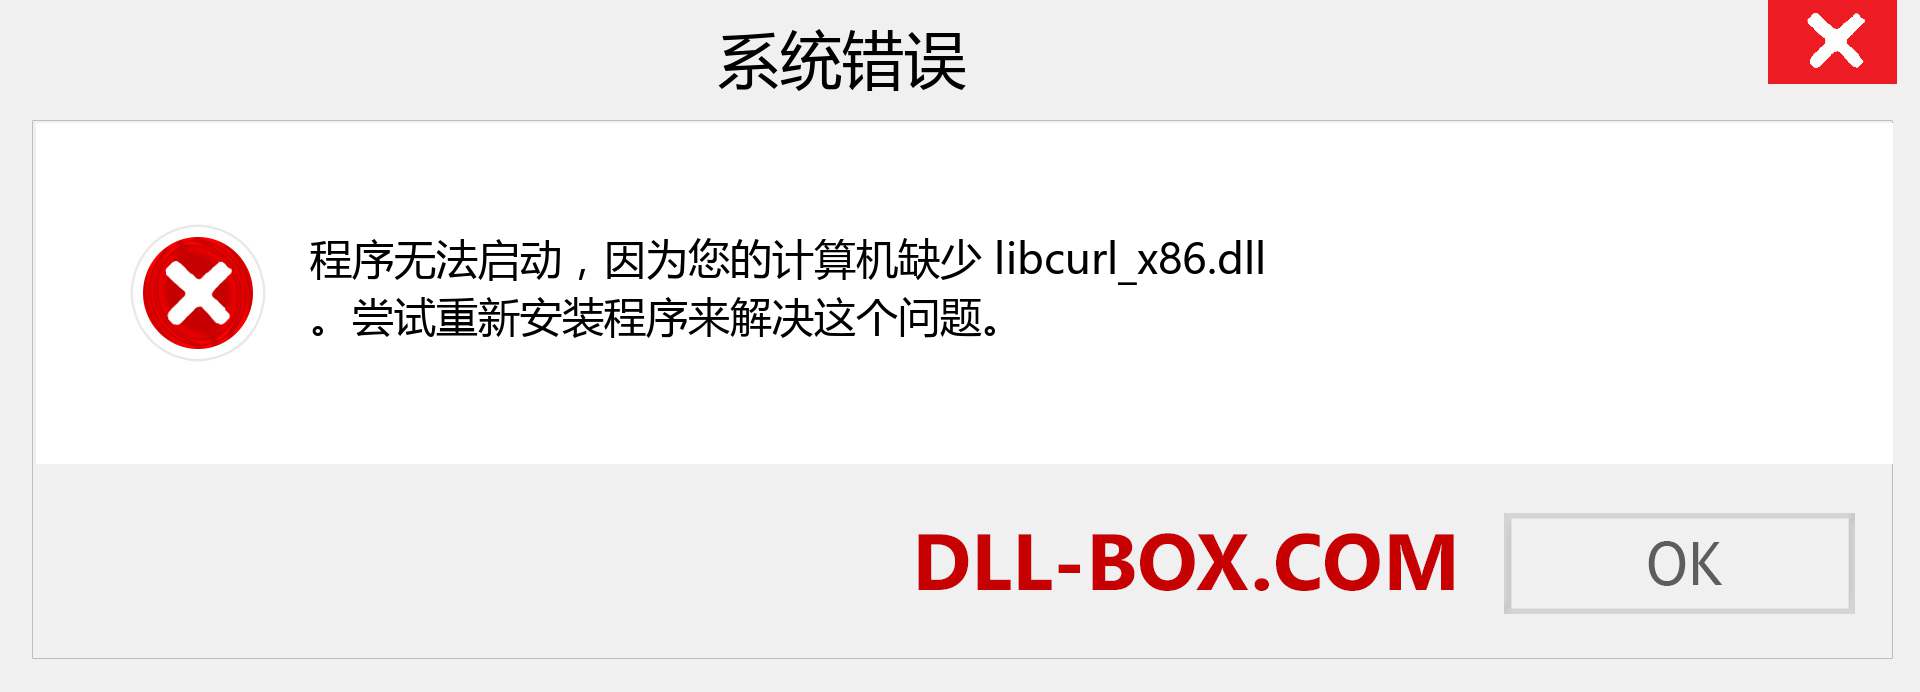 libcurl_x86.dll 文件丢失？。 适用于 Windows 7、8、10 的下载 - 修复 Windows、照片、图像上的 libcurl_x86 dll 丢失错误